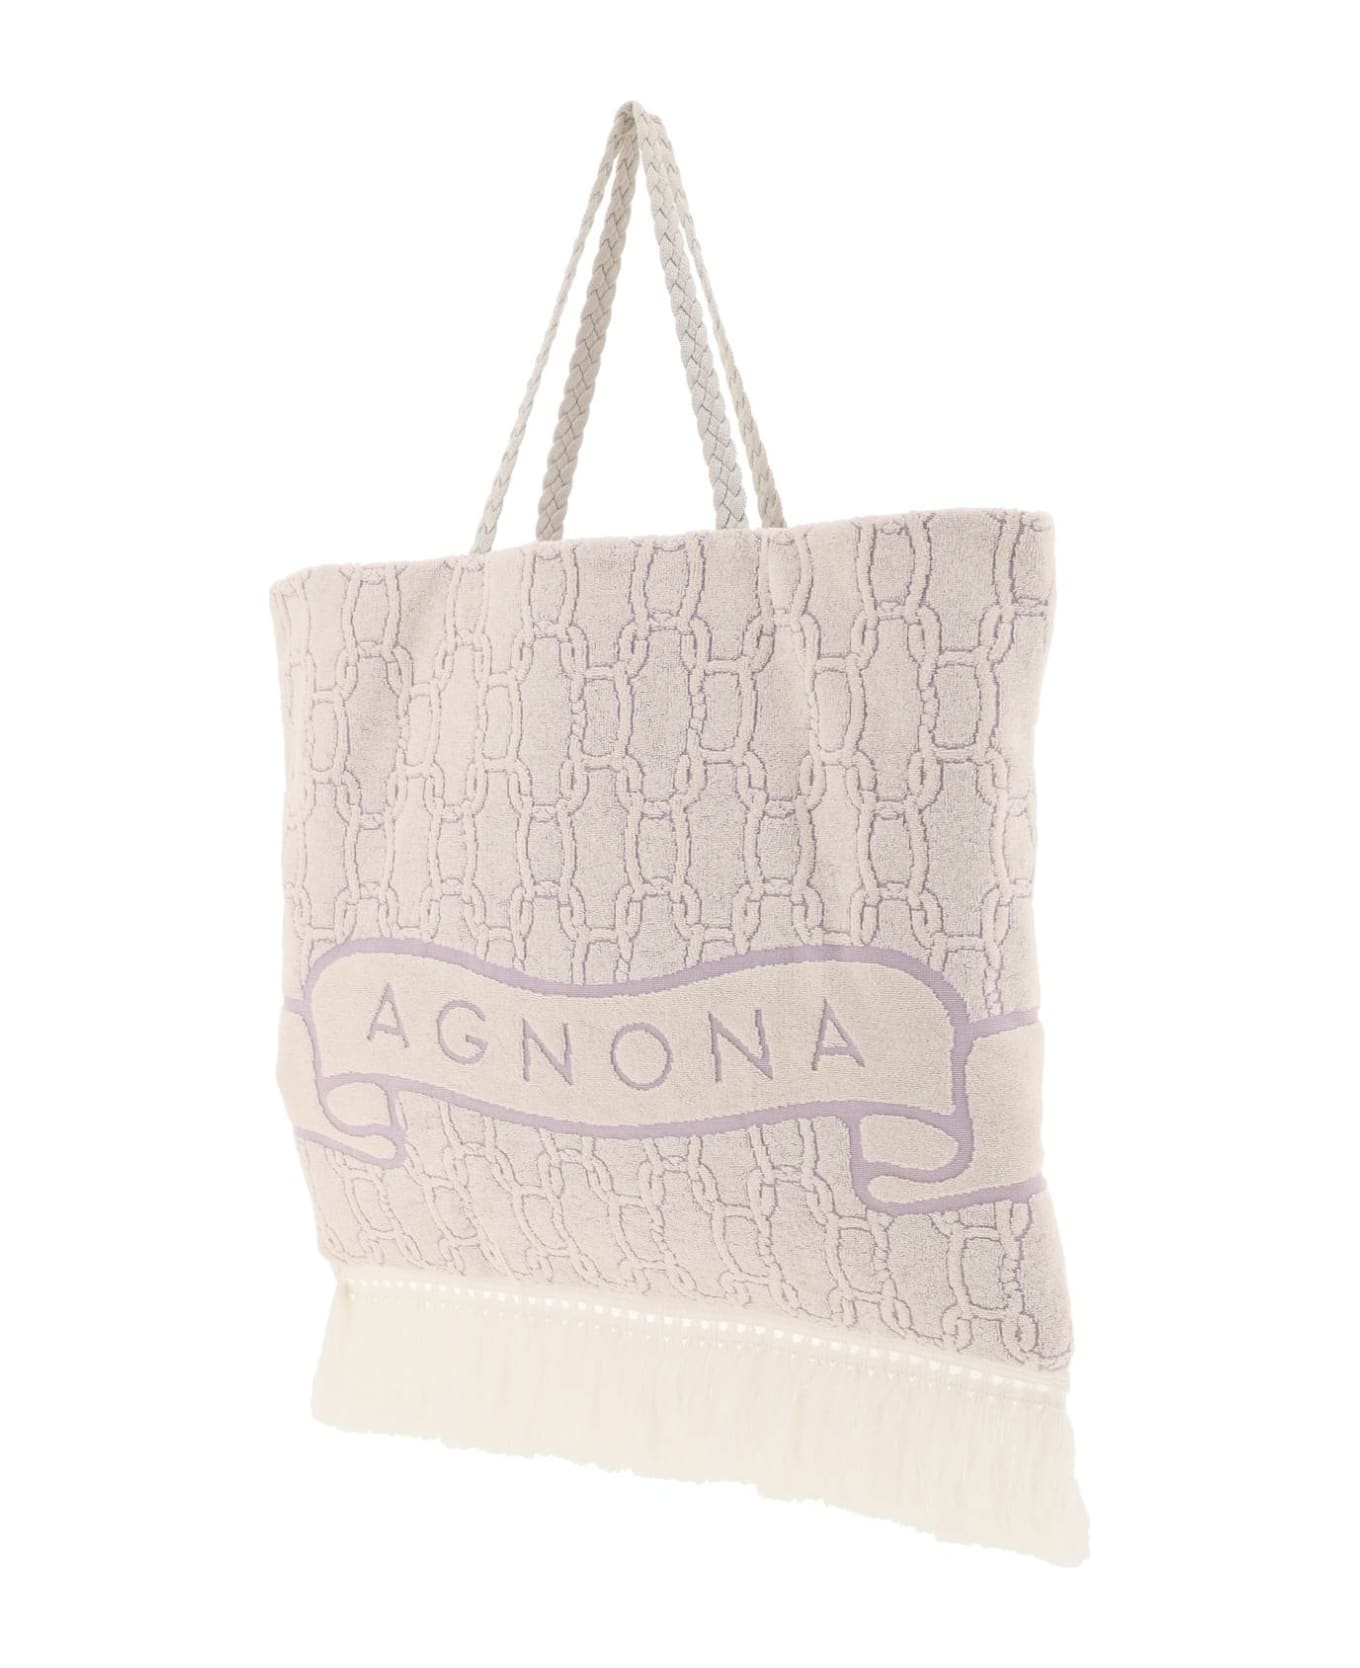 Agnona Cotton Tote Bag - MALVA (White)